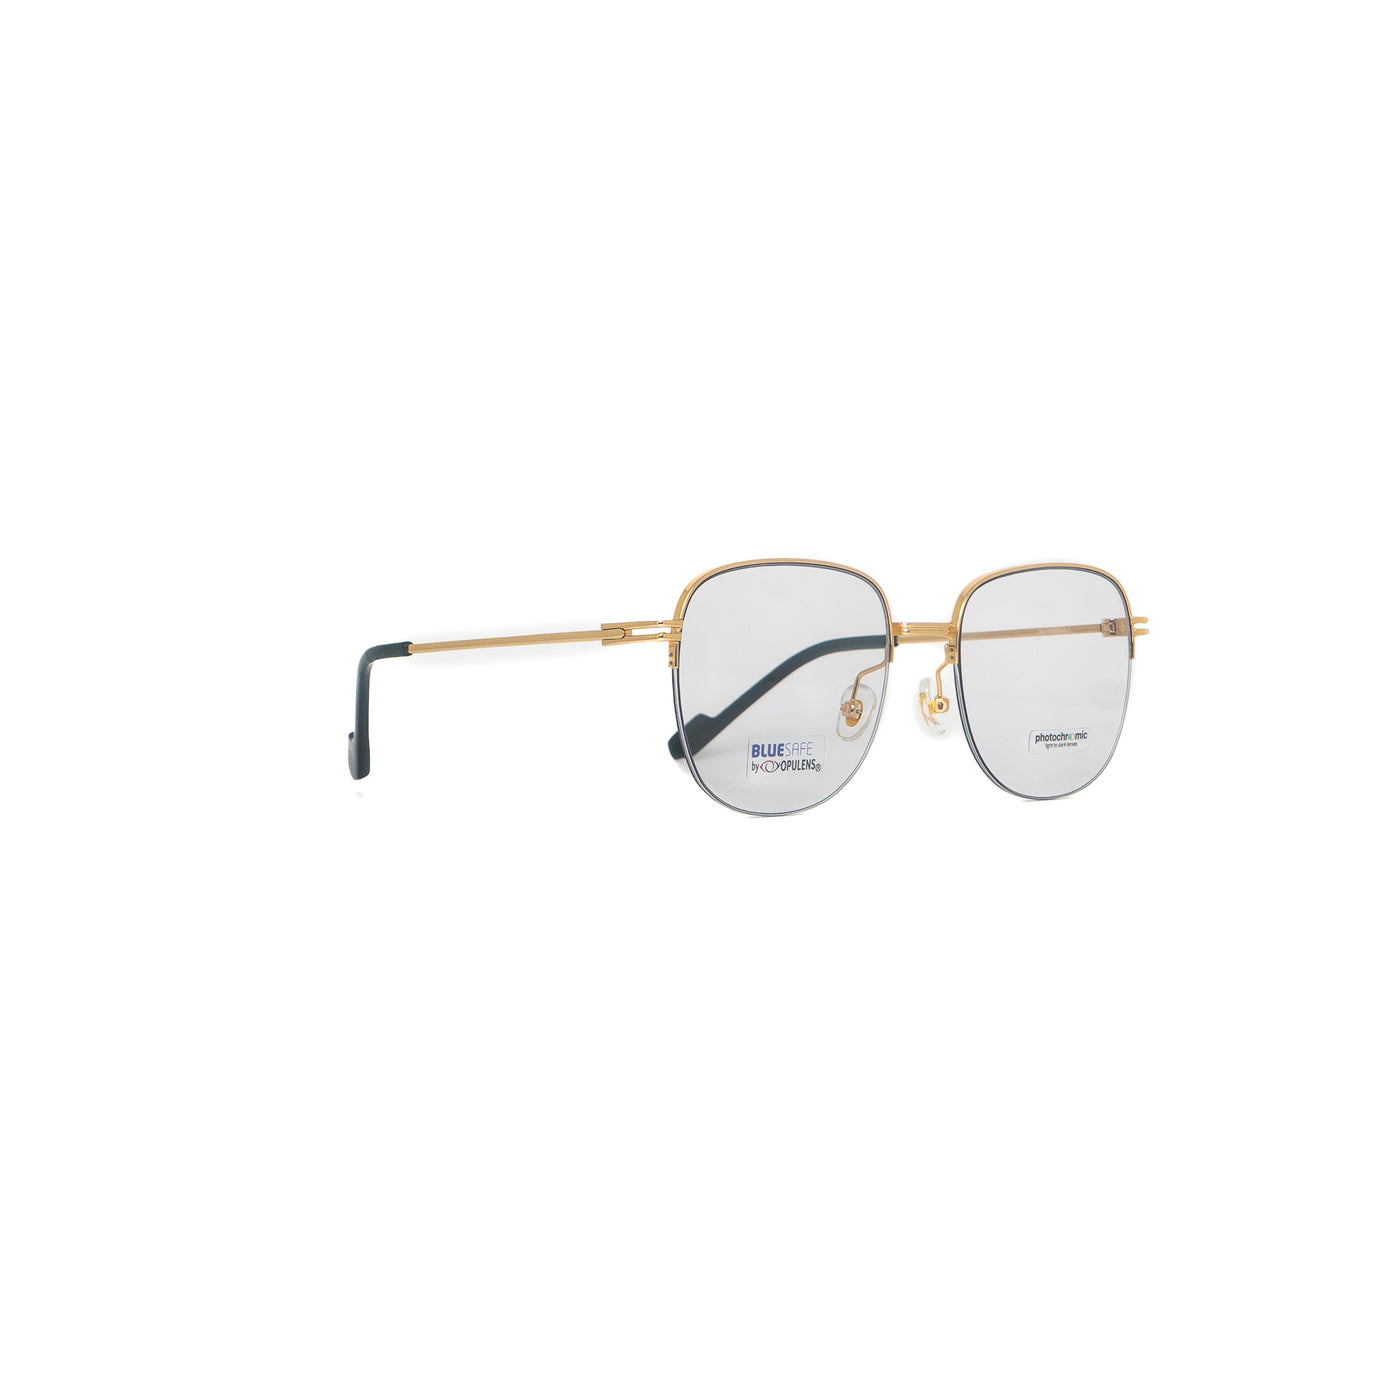 Tony Morgan Eyeglasses for Women | TM31751C256BLK - Vision Express Optical Philippines